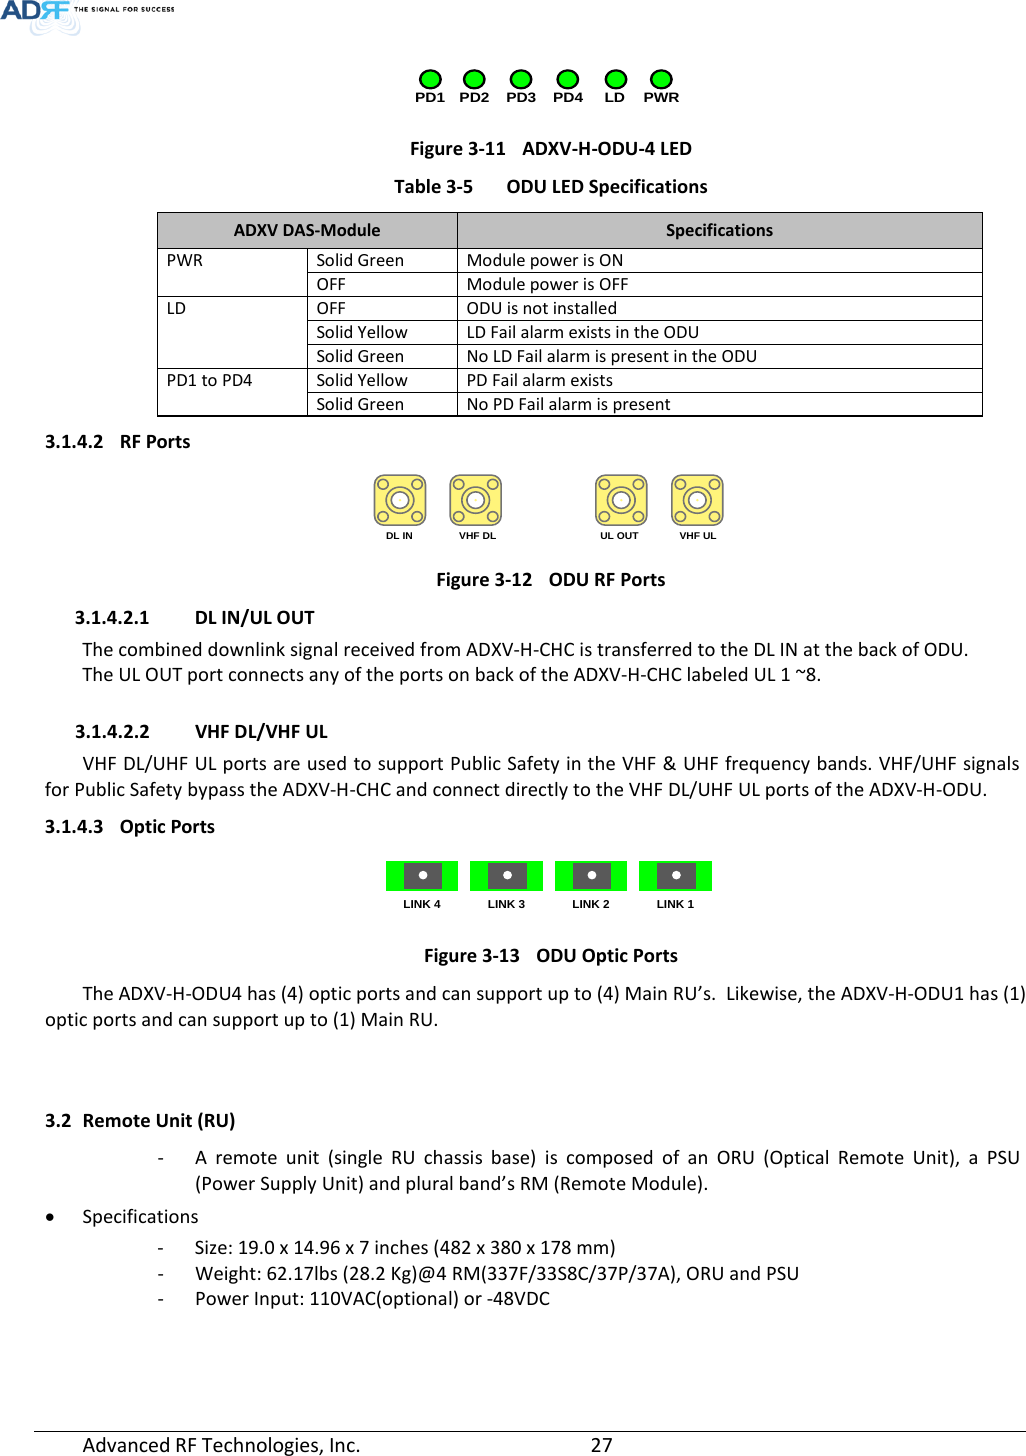 Page 27 of ADRF KOREA ADXV DAS(Distributed Antenna System) User Manual ADXV DAS